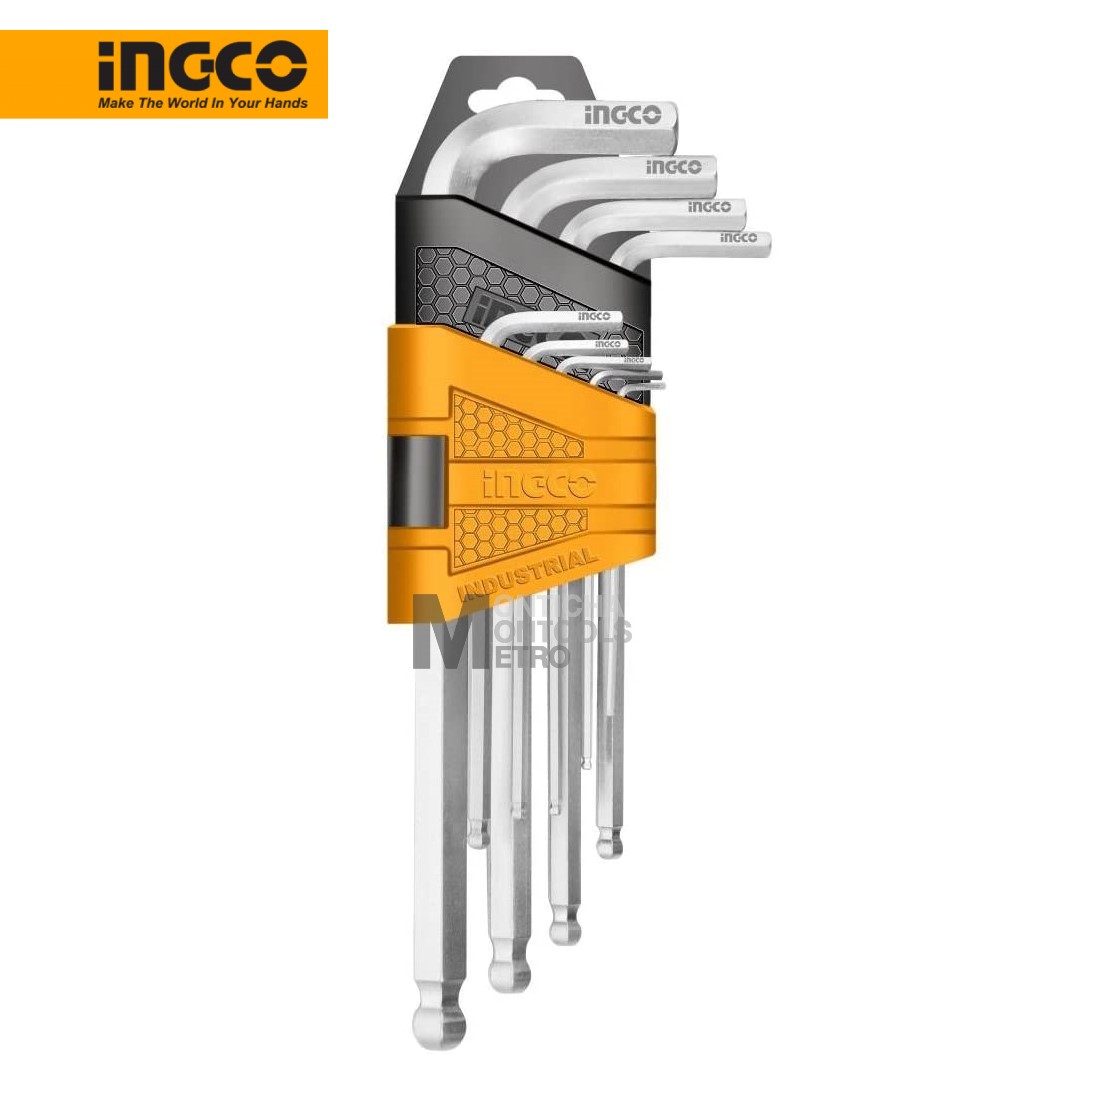 INGCO ประแจแอล 9 ชิ้น ขนาด 1.5-10 mm ประกอบด้วยขนาด 1.5, 2, 2.5, 3, 4, 5, 6, 8, 10 มม. HHK11091 รุ่นงานหนัก เหล็กแข็งไม่บิด ไม่มีหวาน by METRO